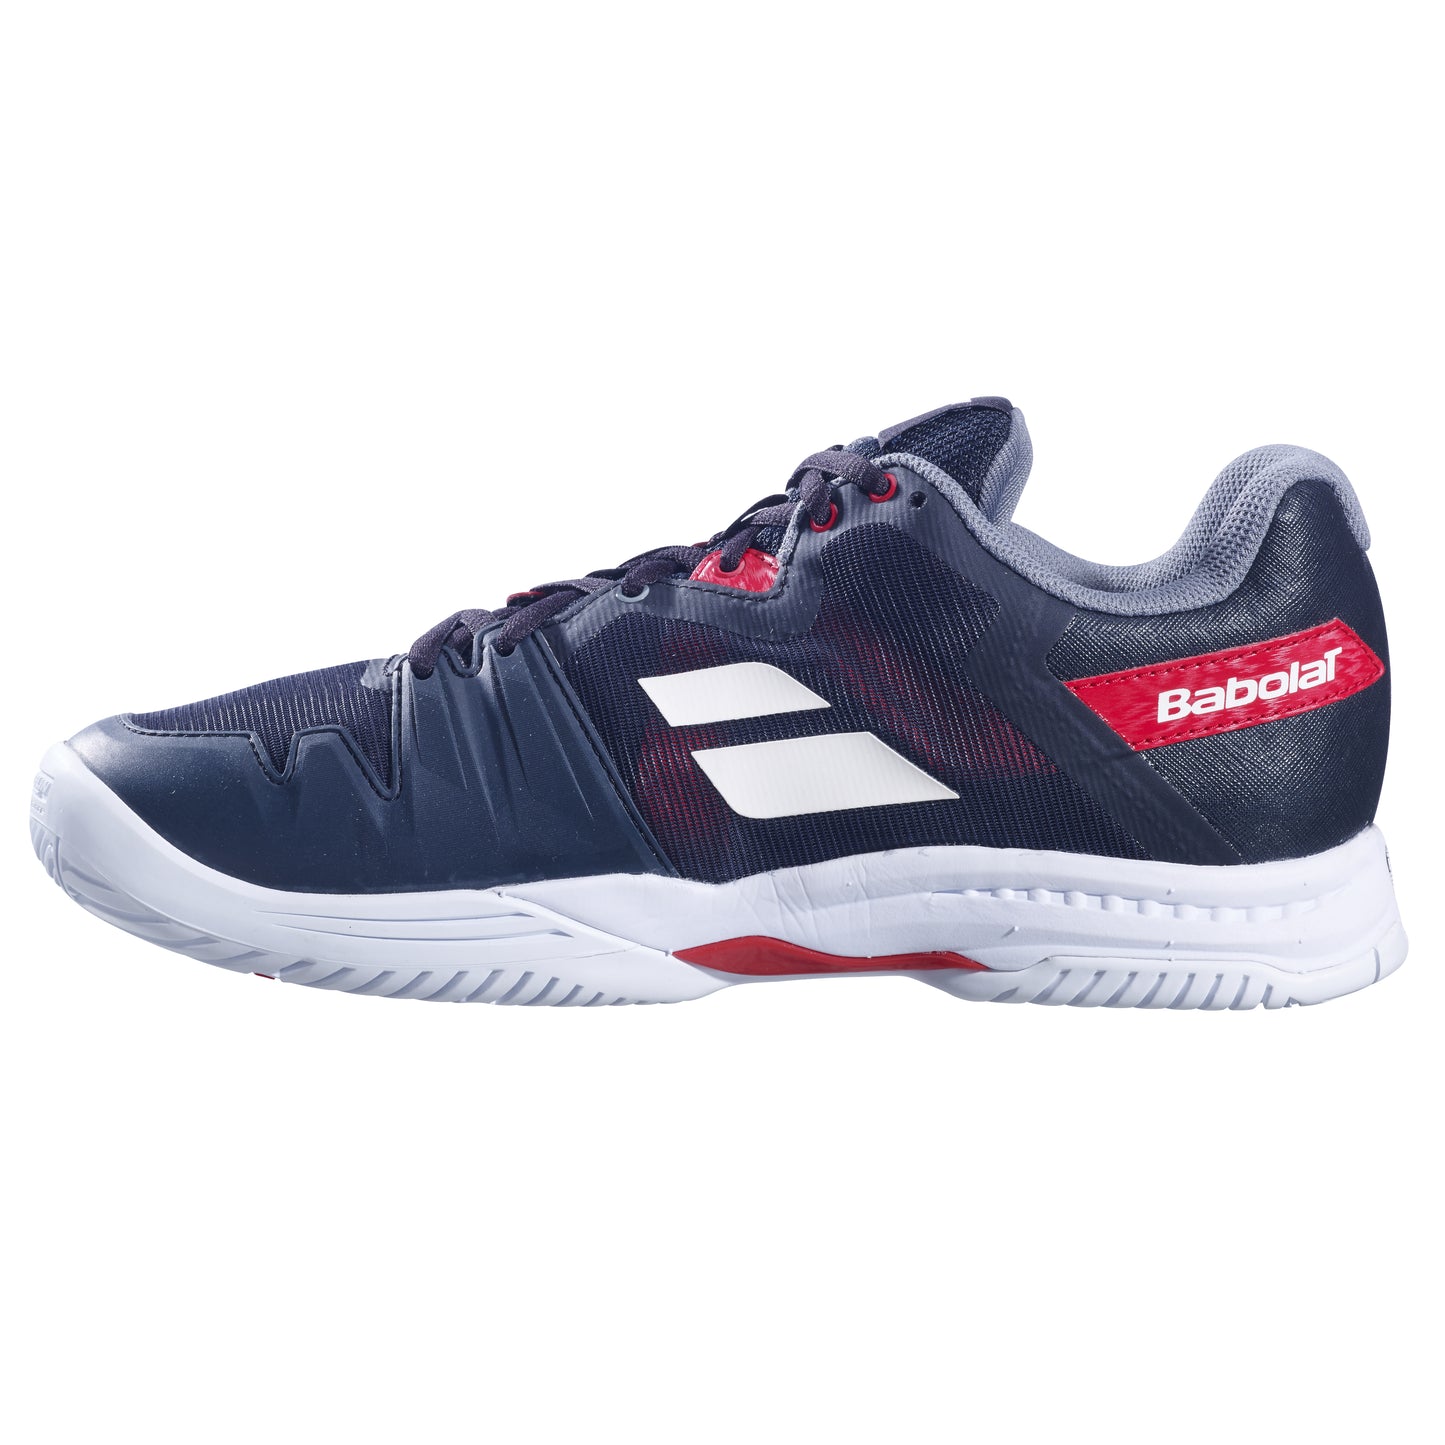 Babolat SFX3 AC men tennis shoes - Black/Red